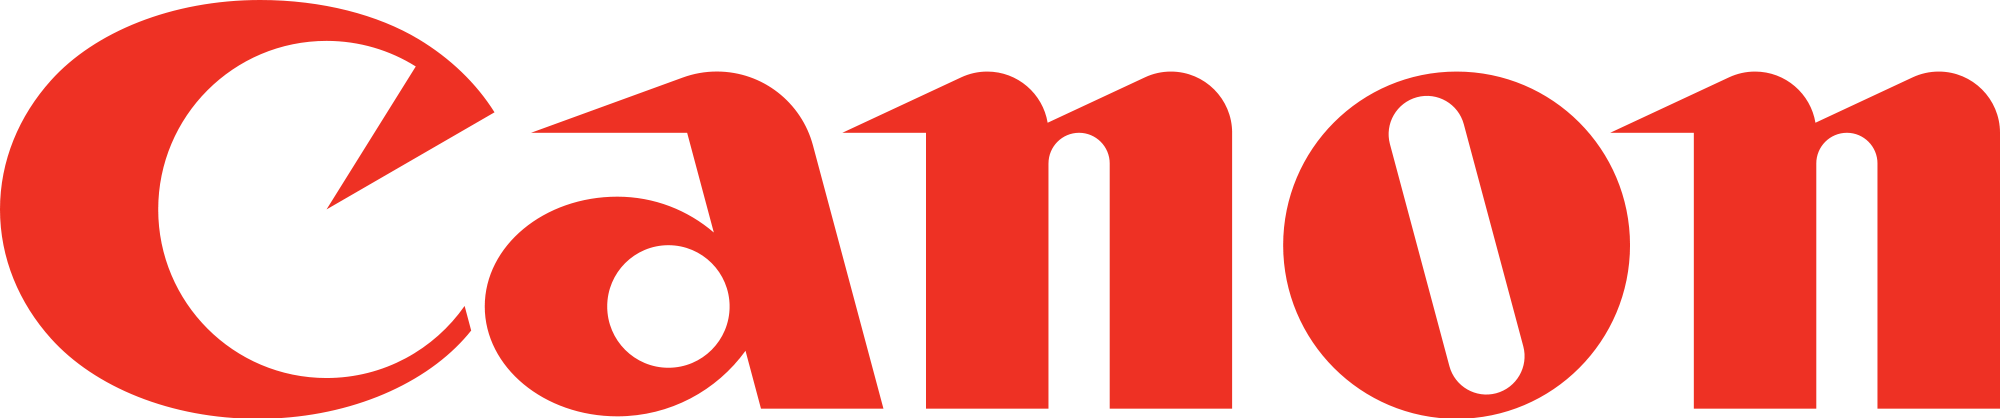 Red Canon Logo - Canon logo origin | ImageNation